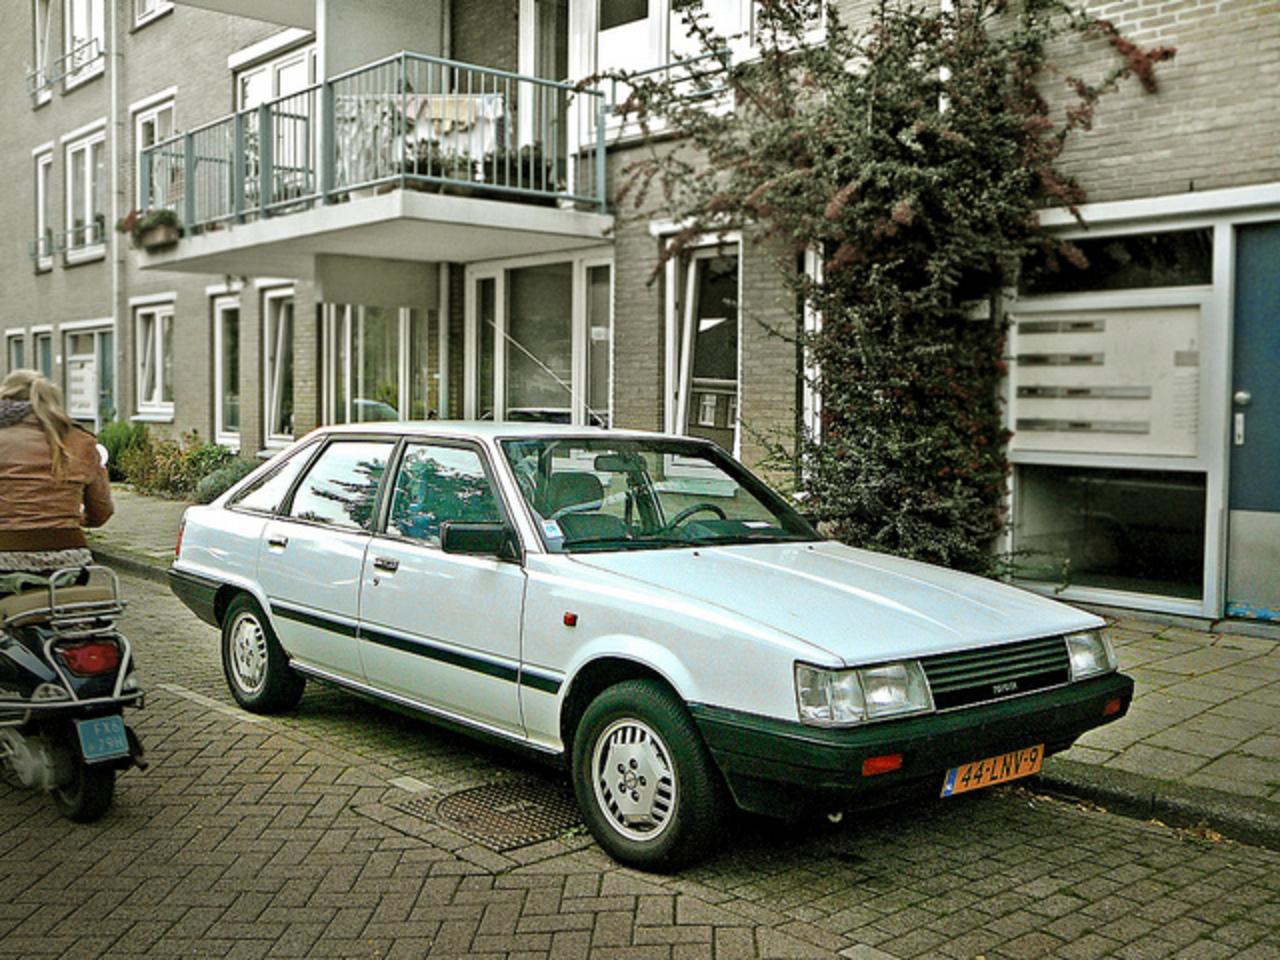 Toyota Camry GLi Automatic, 1984, Amsterdam, Jacob van Lennepkade, 09-2010